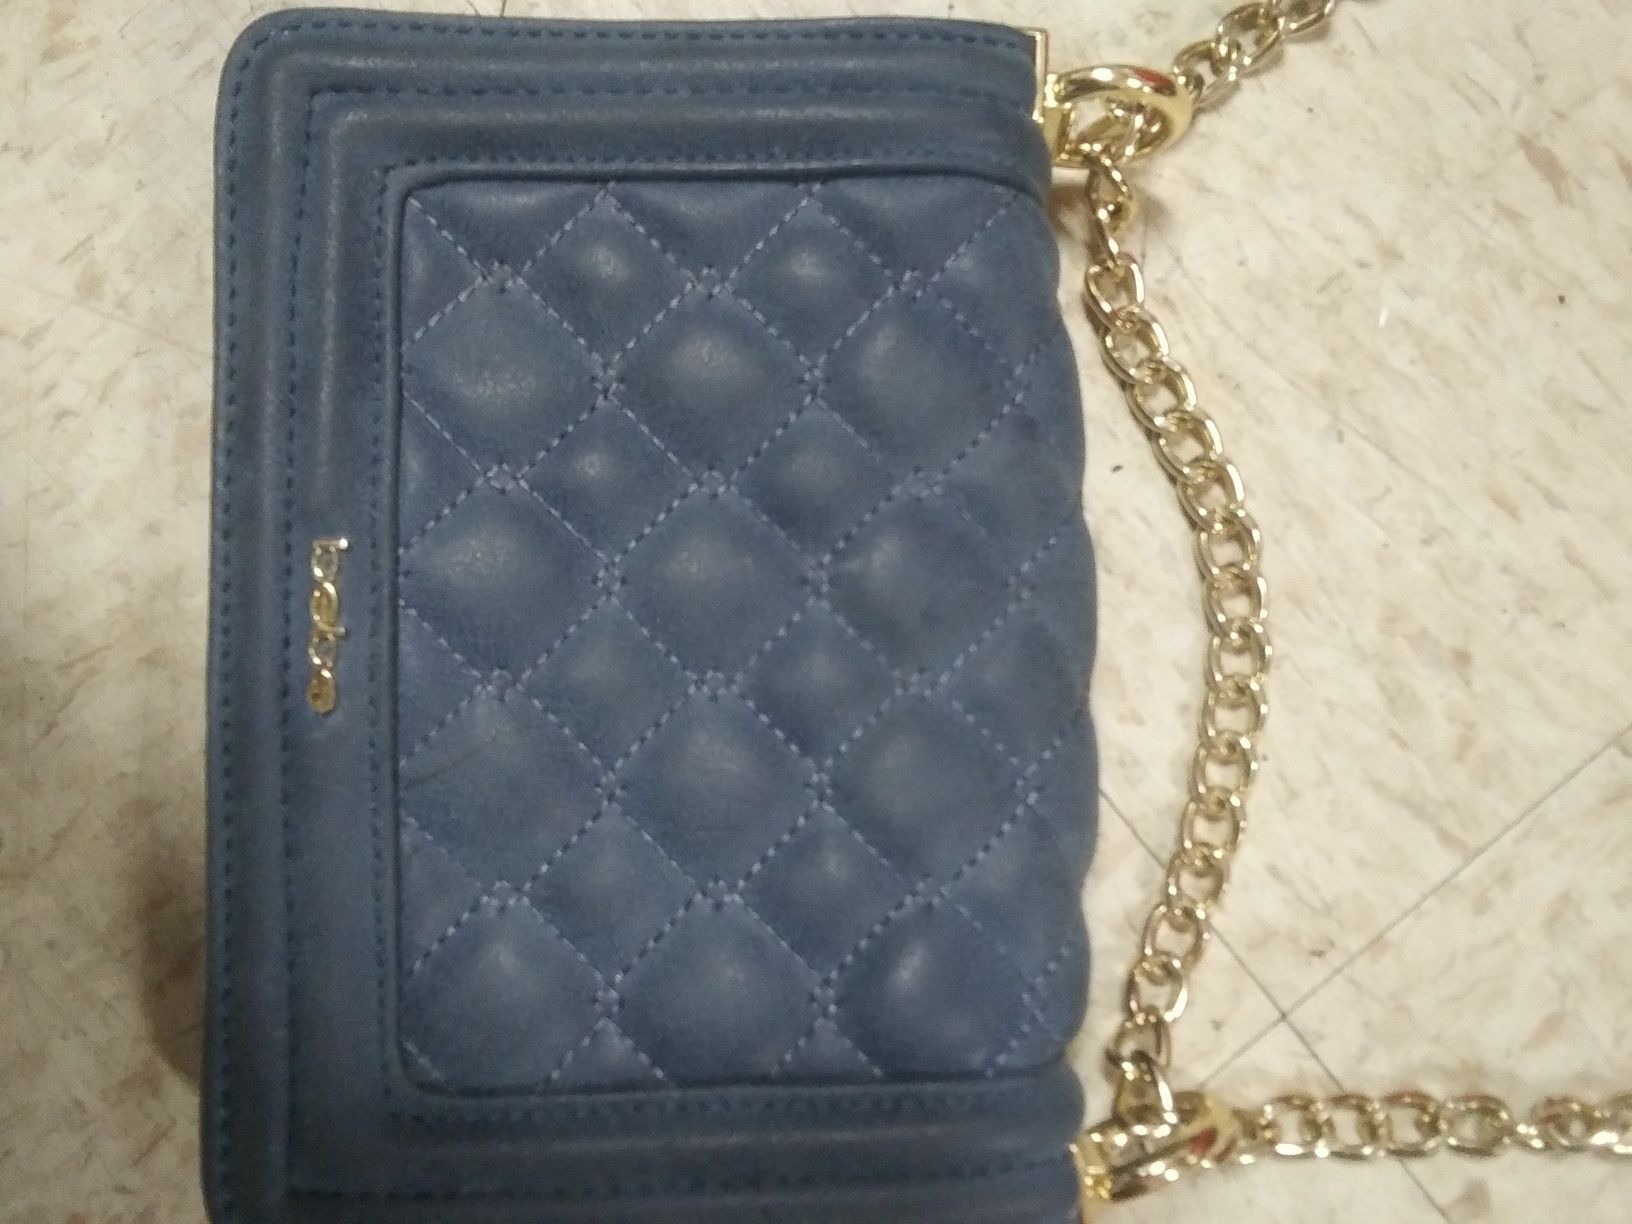 Babe brand Ladies purse